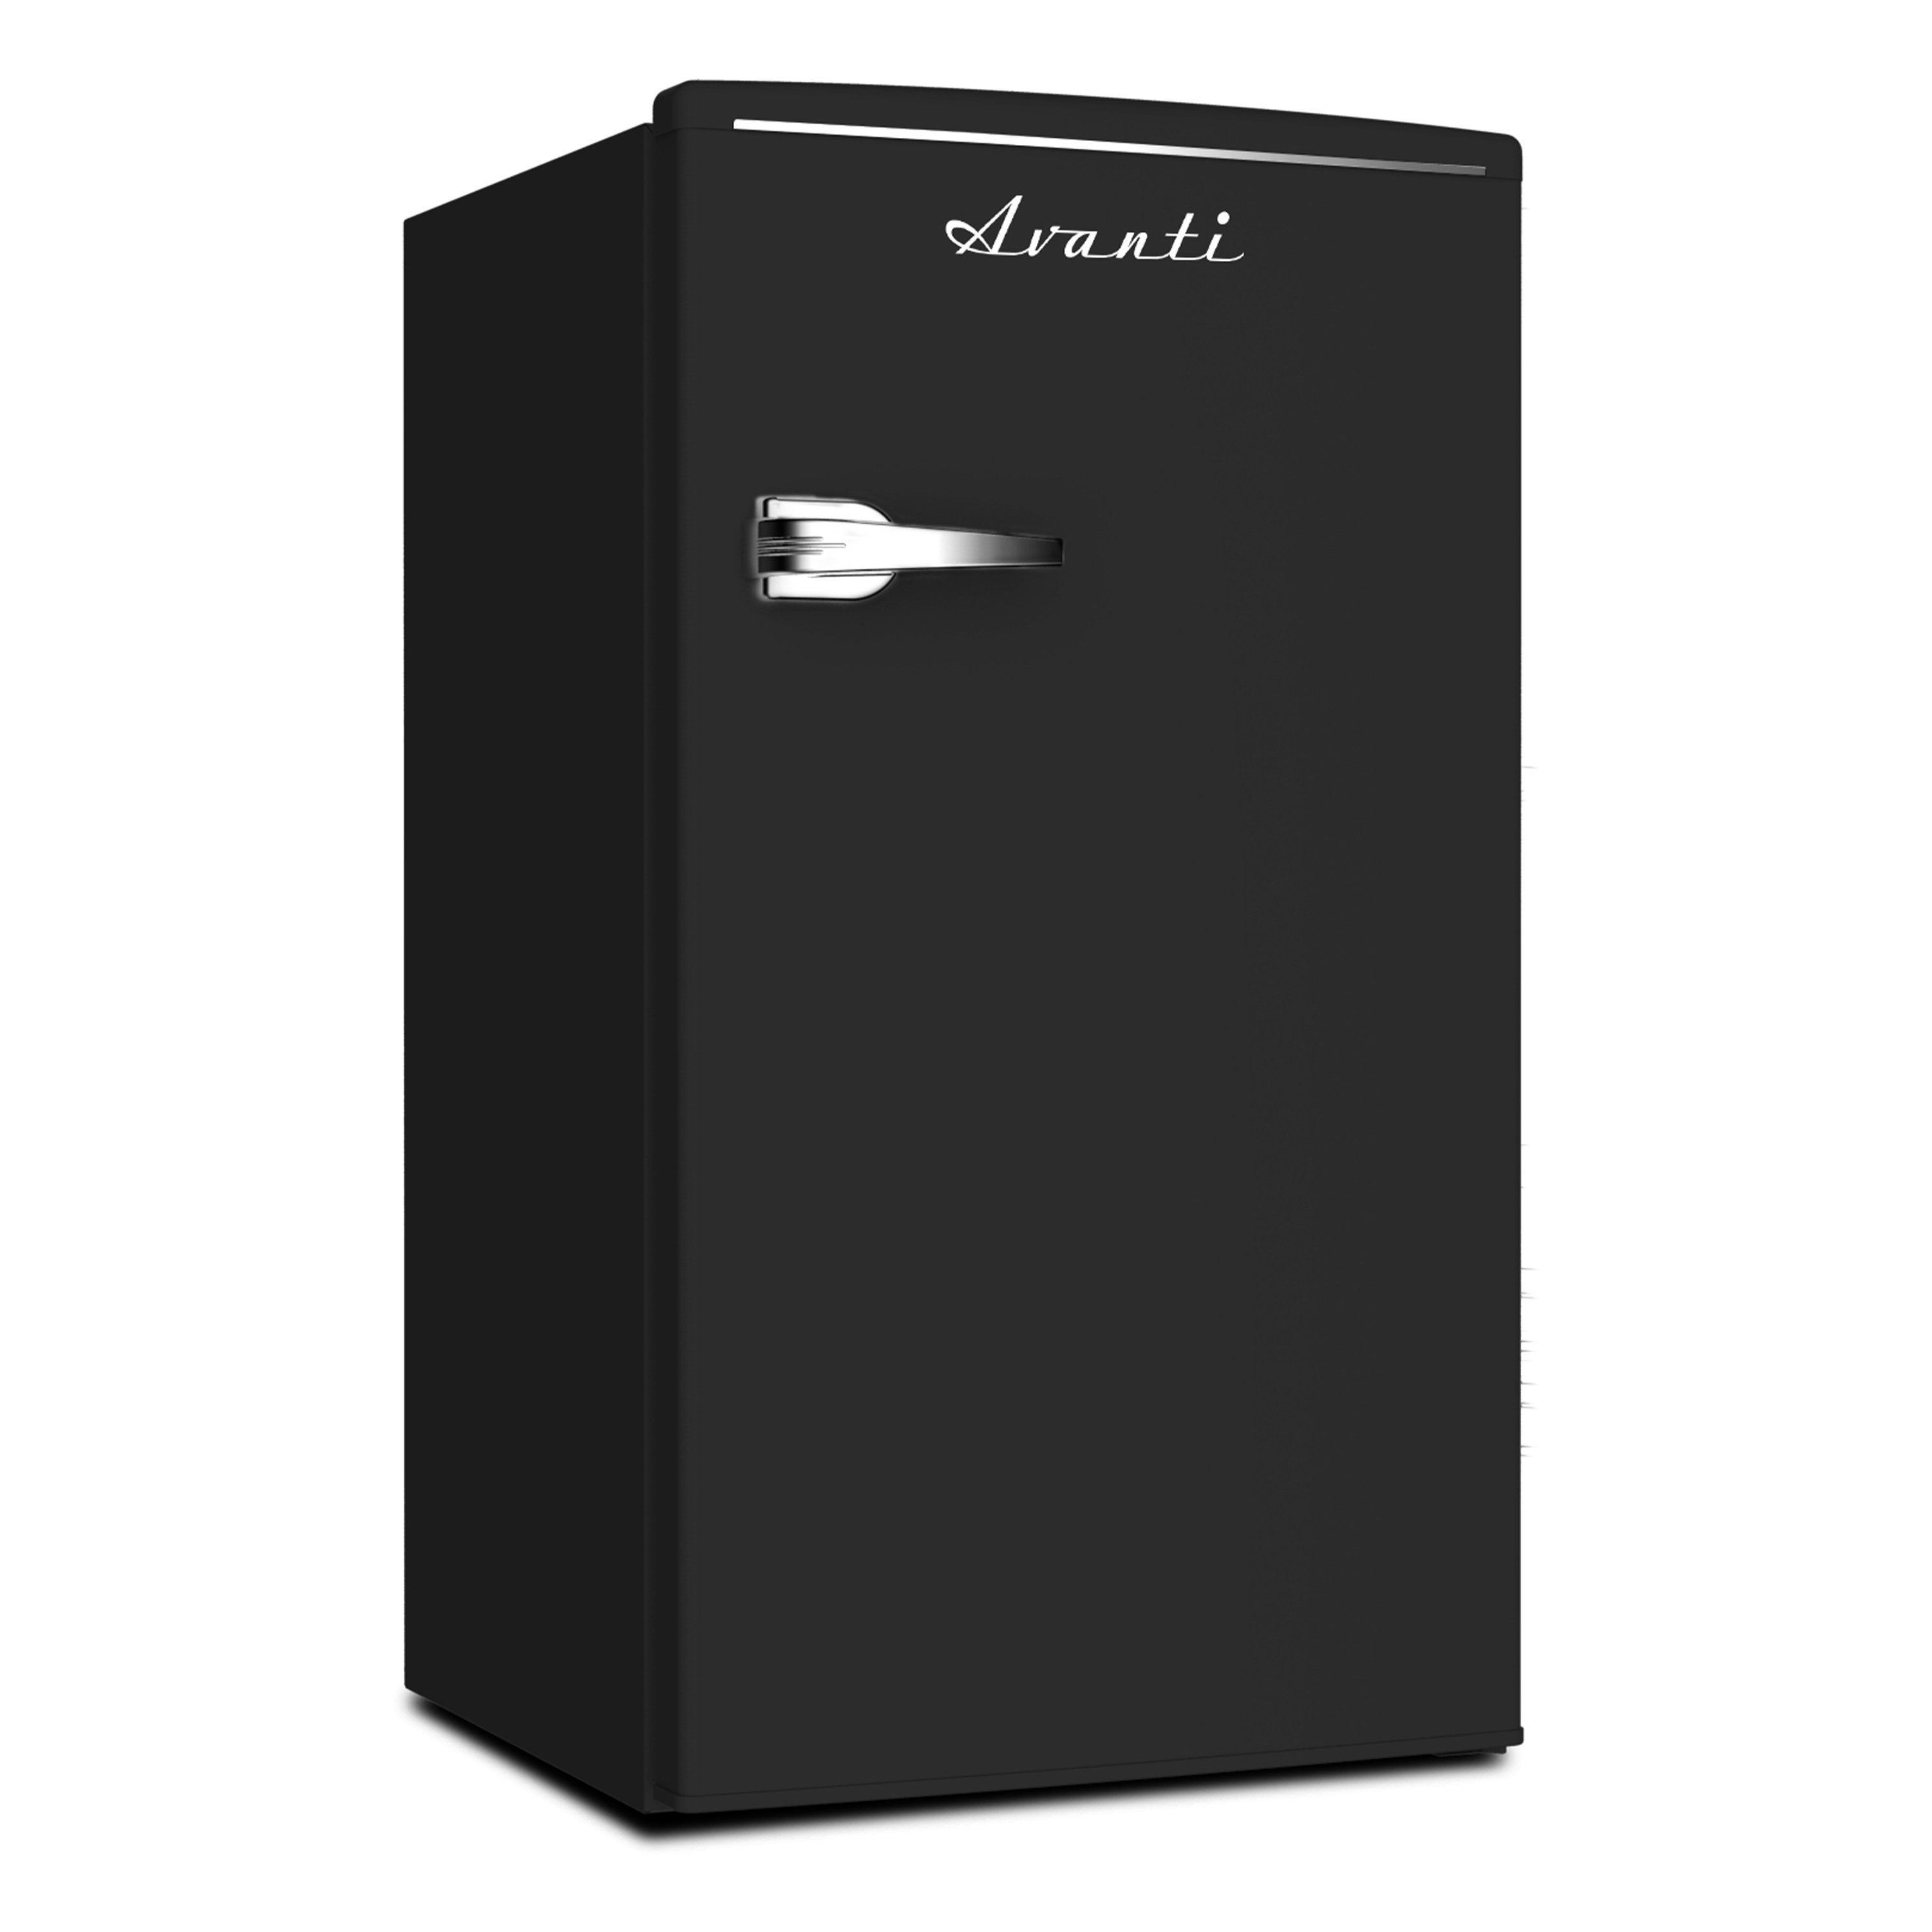 Avanti 3.1 Cu. ft. Retro Compact Refrigerator Black